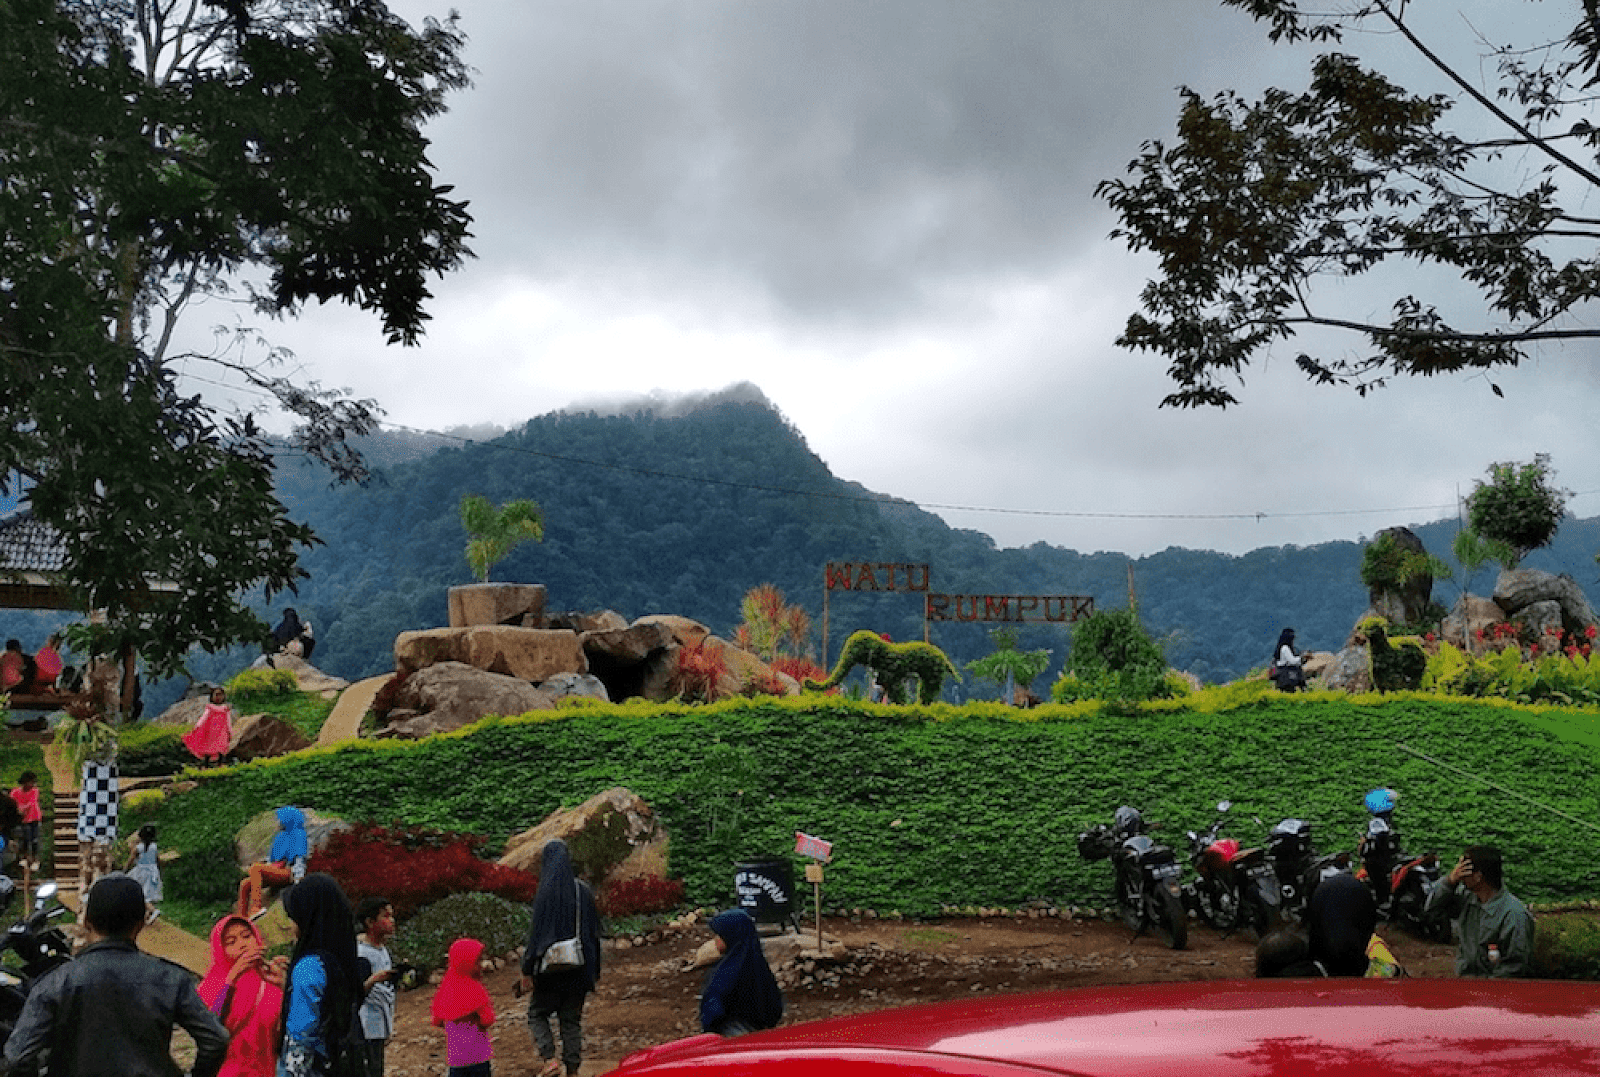 Lokasi dan Jam Buka Watu Rumpuk Madiun, Spot Wisata Baru Yang Siap